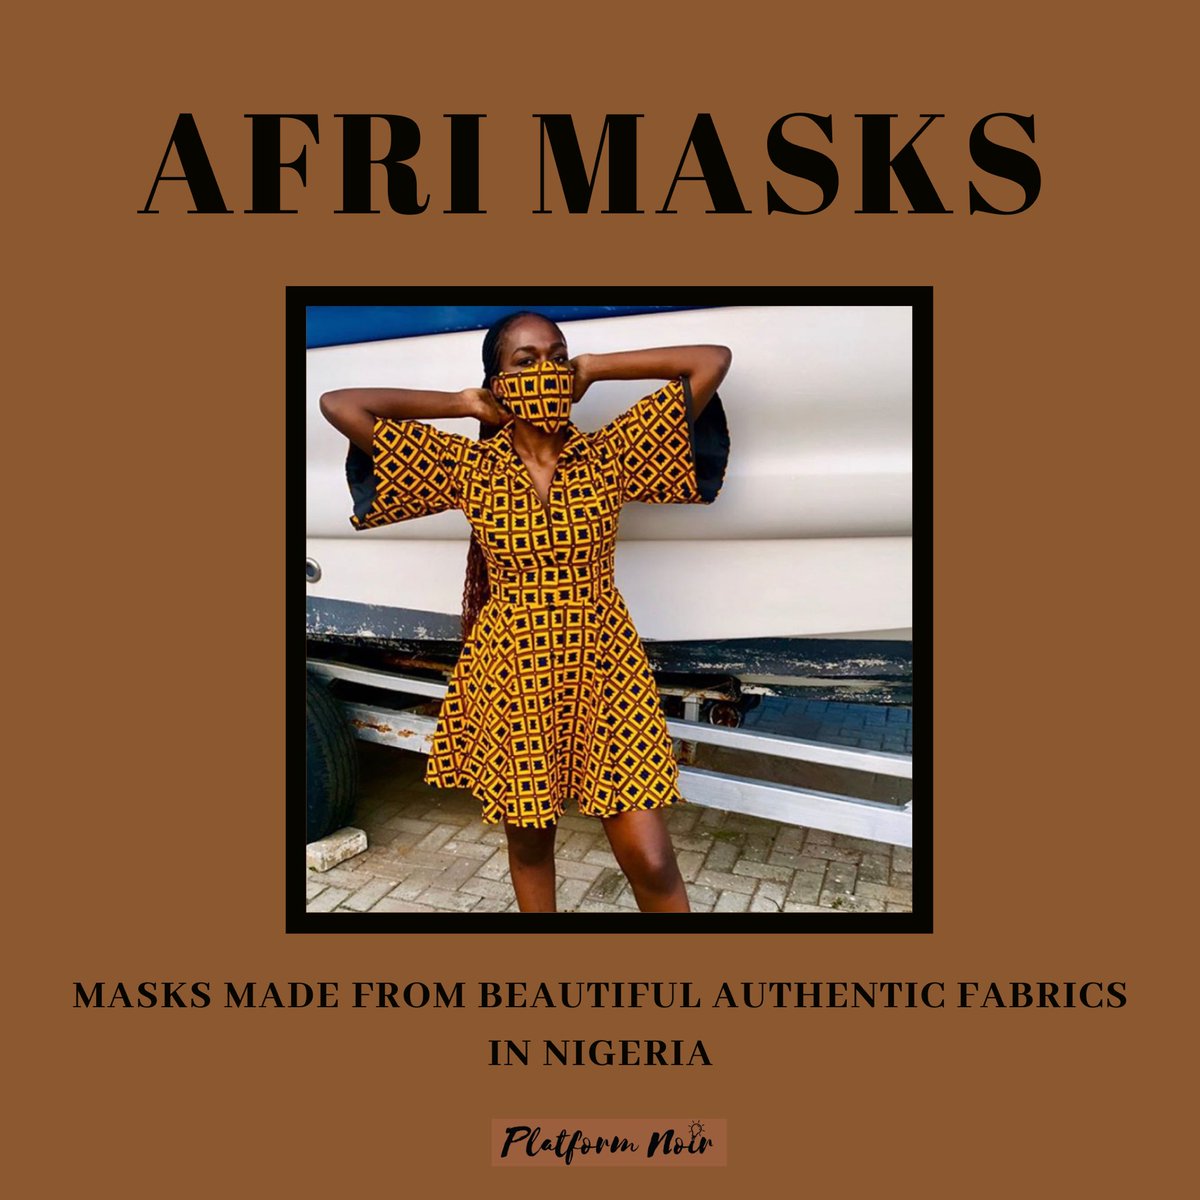 Afri MasksFace masks made from beautiful authentic fabrics in Nigeria https://instagram.com/afri.masks?igshid=1rla9nnnxnp6i